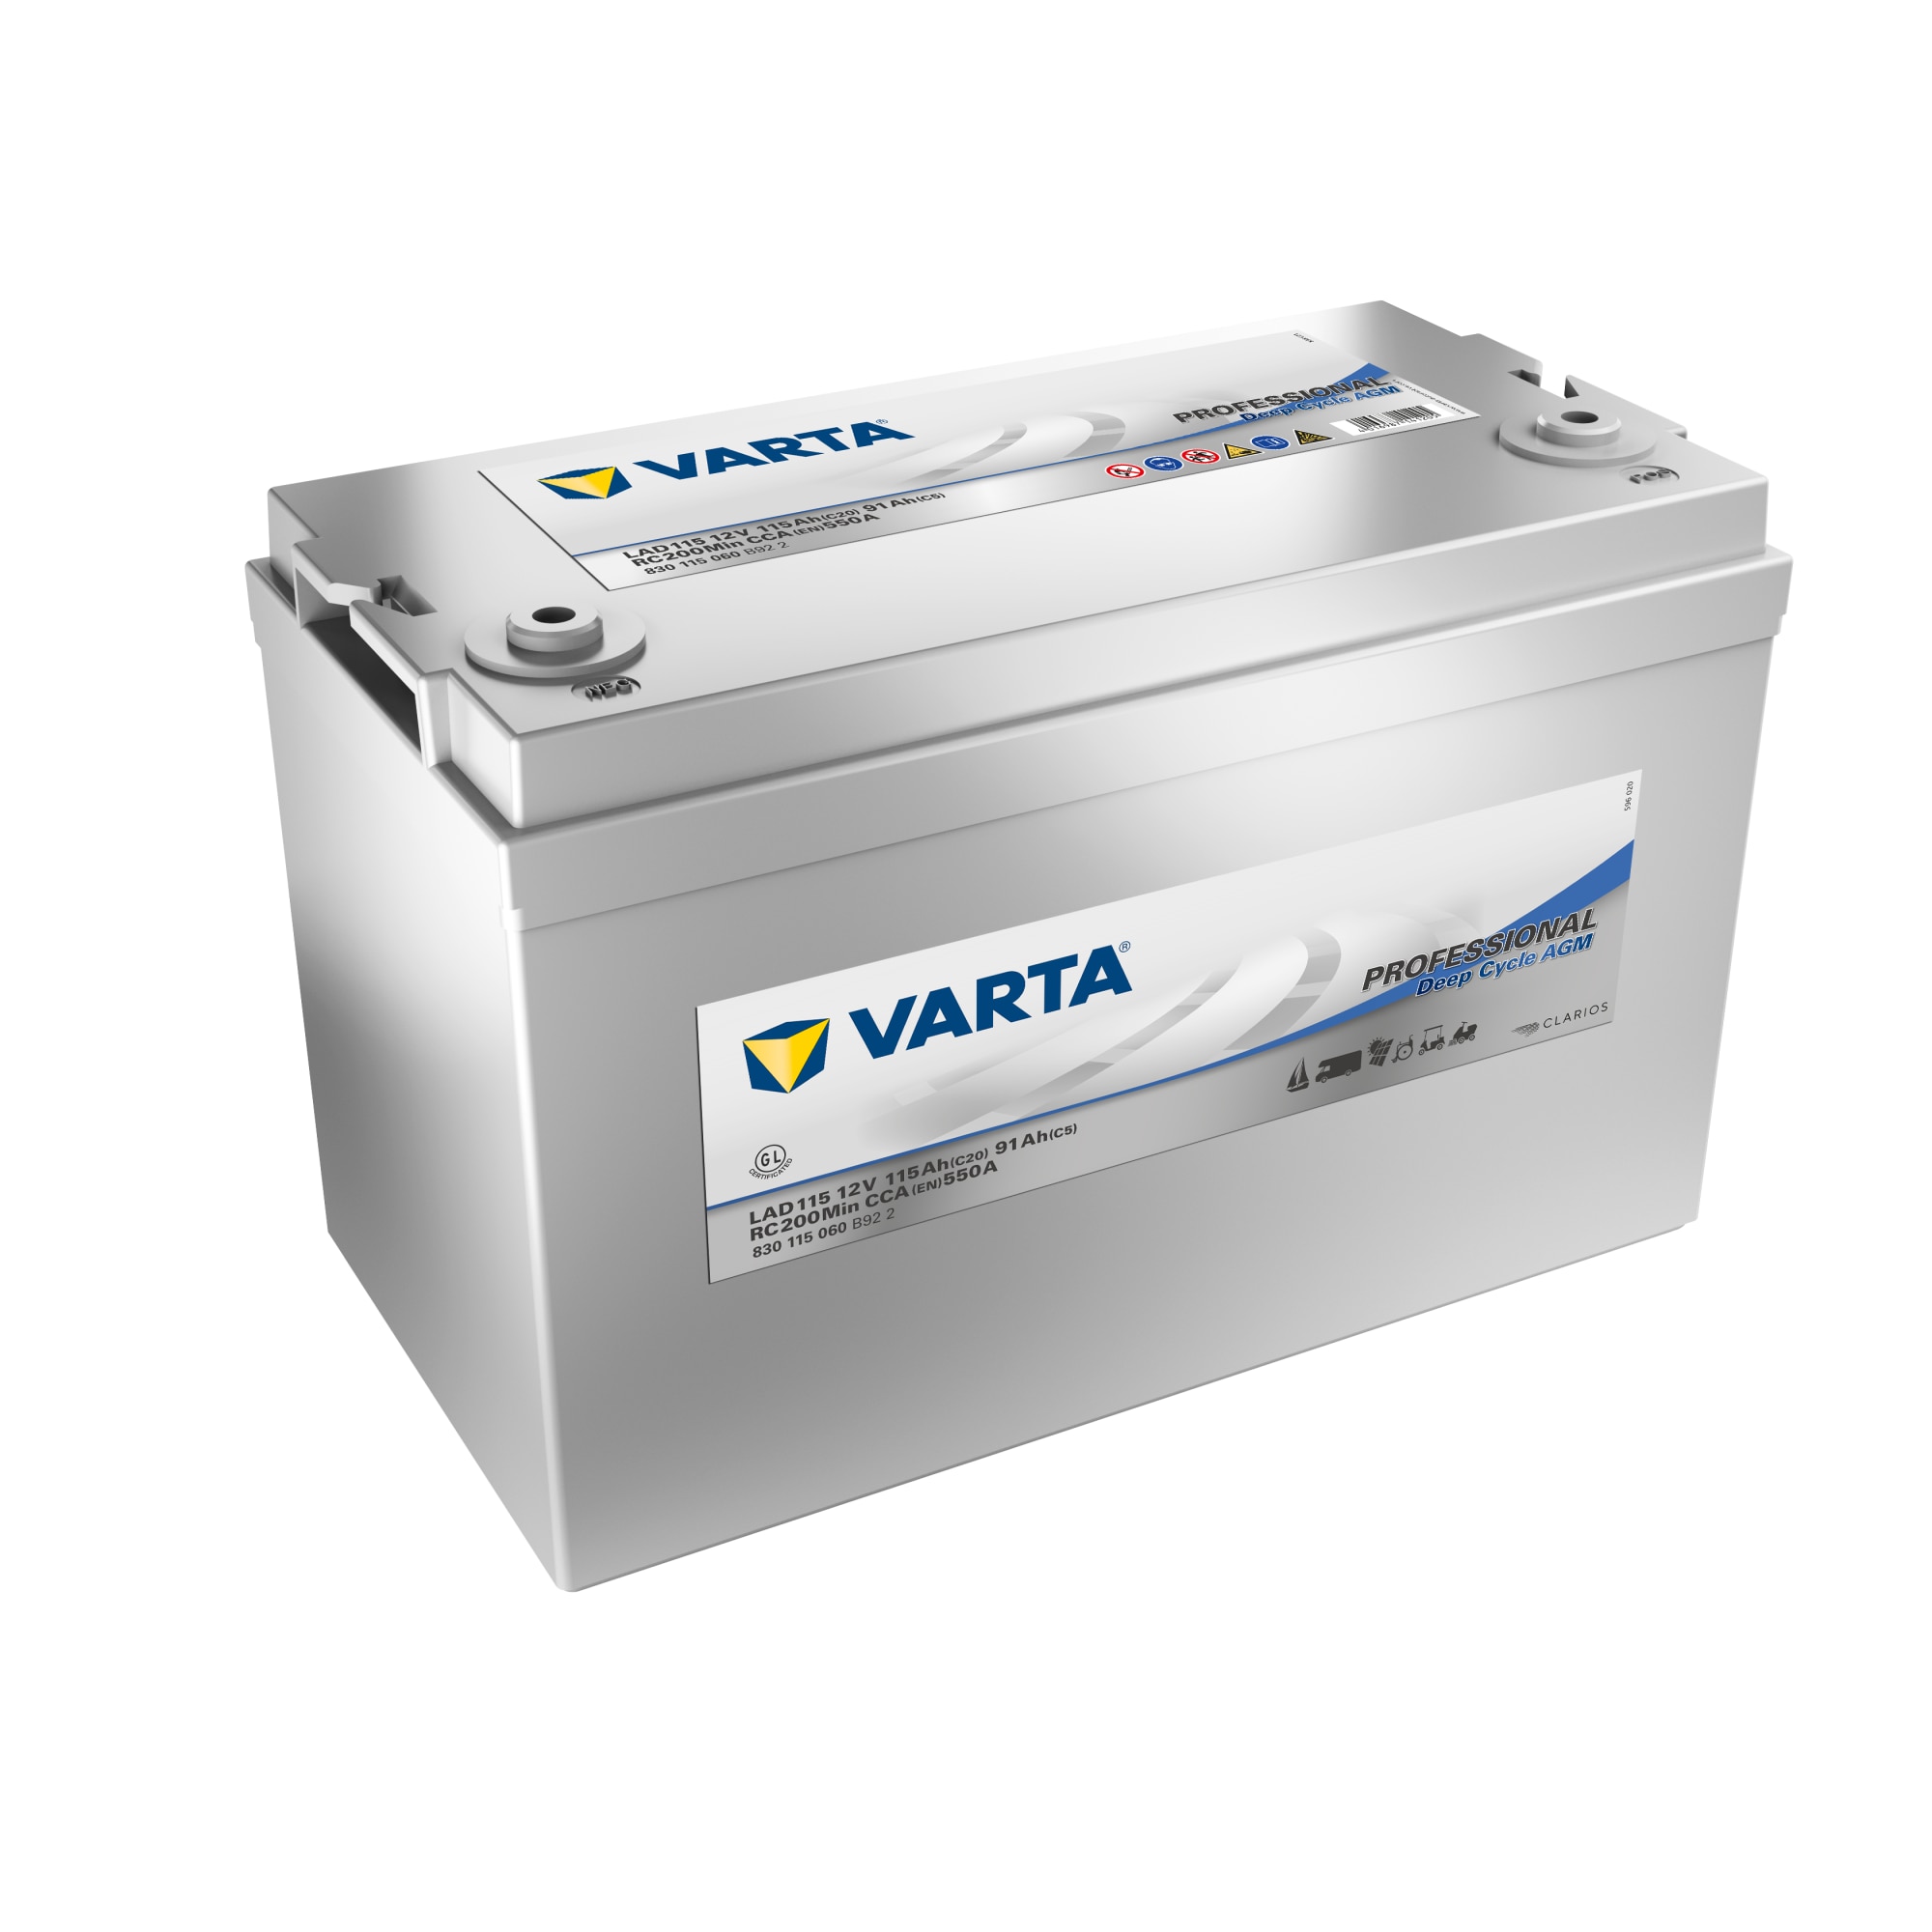 Acumulator VARTA Professional Deep Cycle AGM 12V 115Ah, 830115060, LAD115 